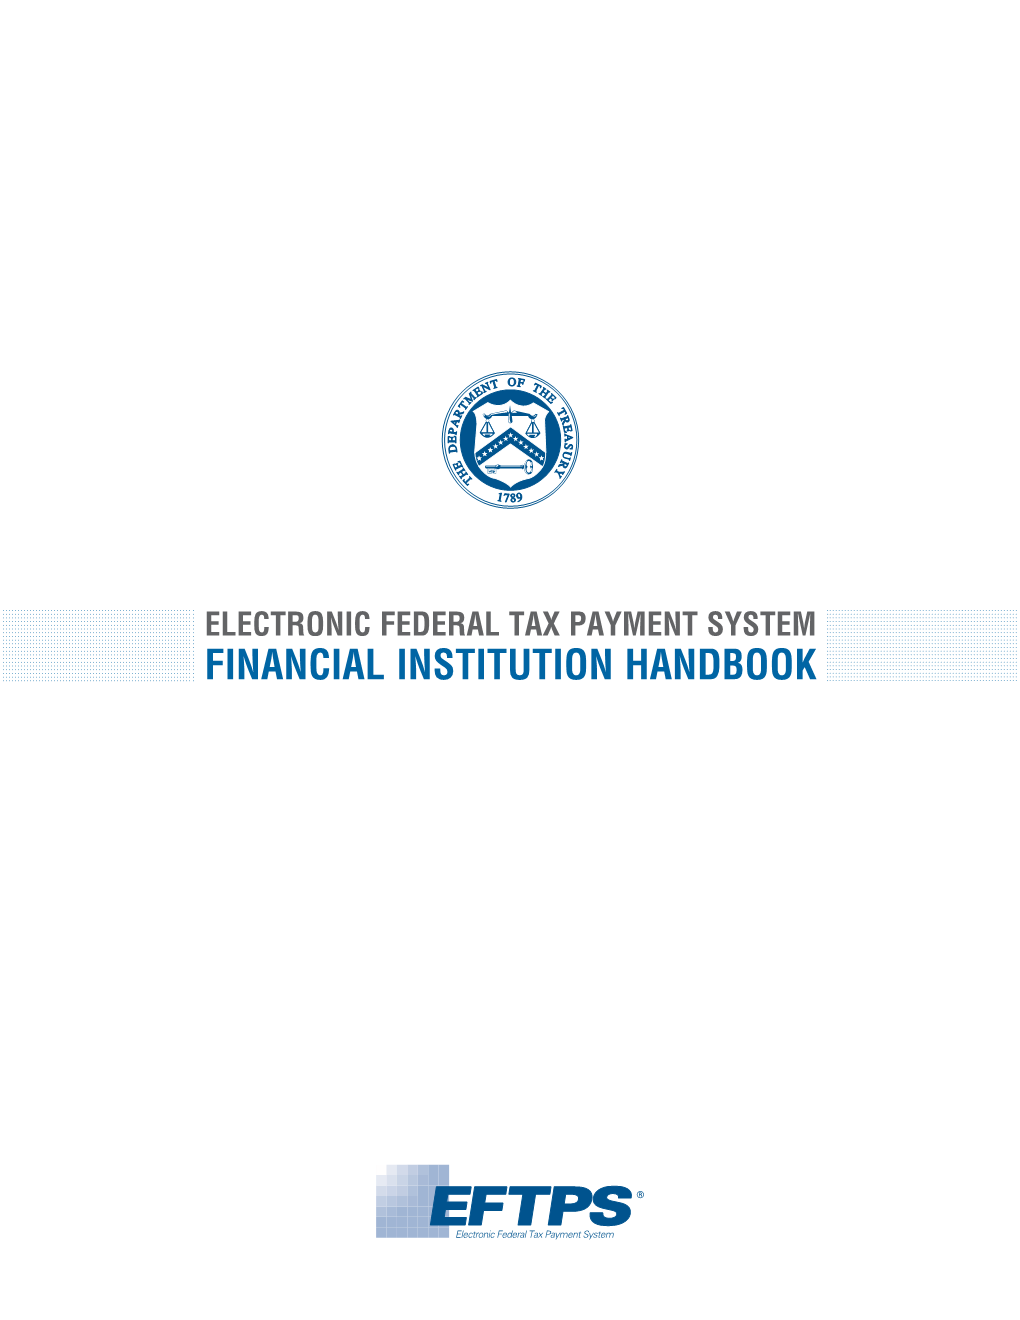 EFTPS Financial Institution Handbook